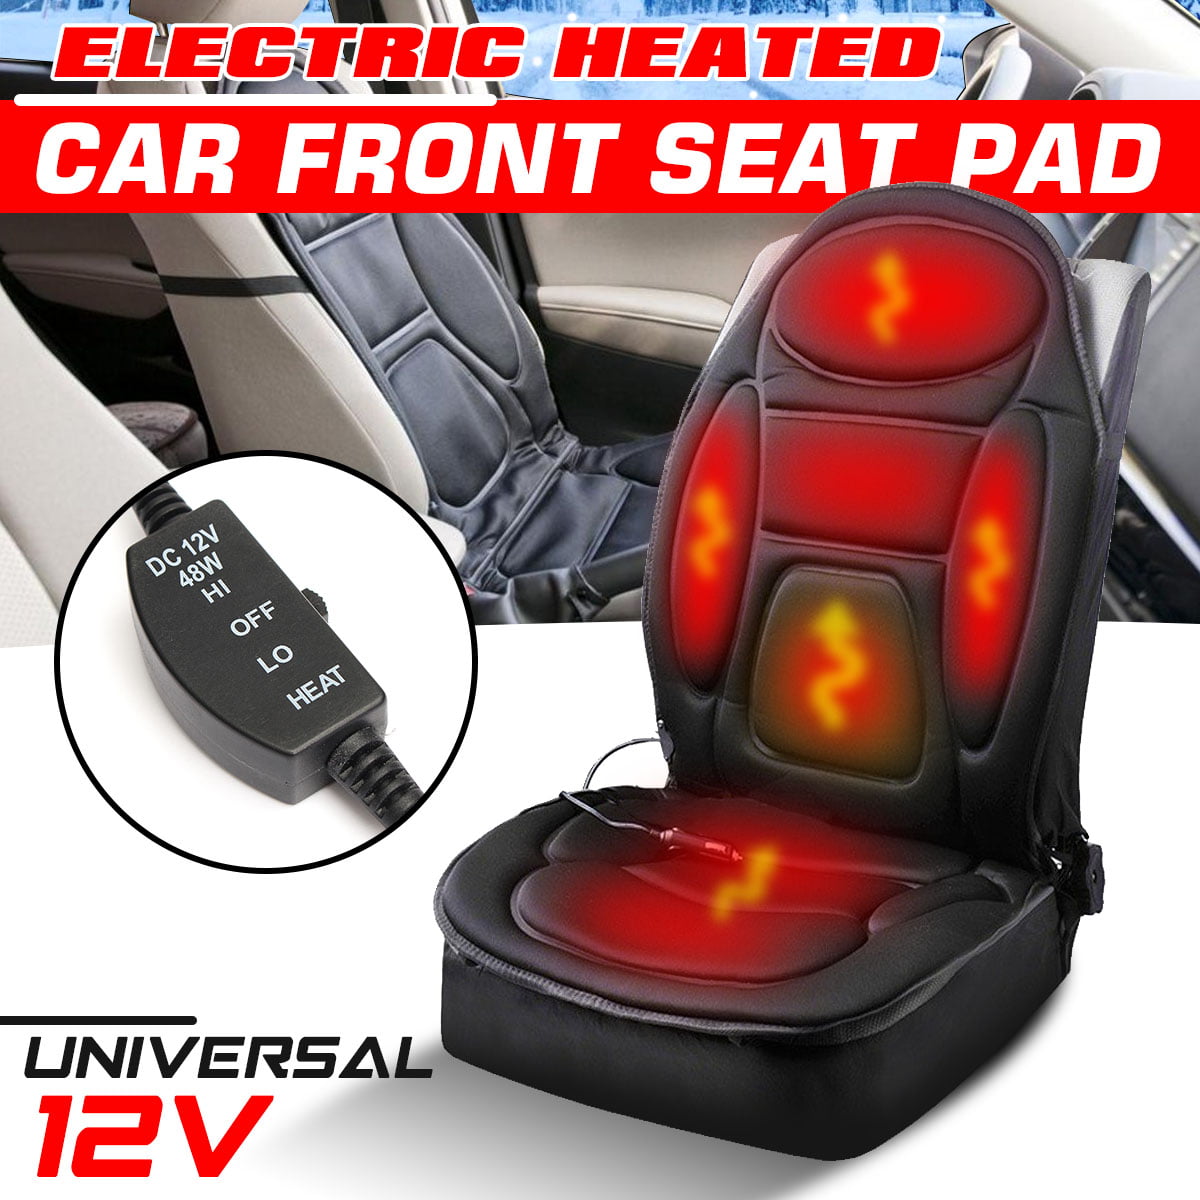 Car Van 12v Heated Seat Pad Cover Plug In Back Lumber High Low Adjustable Heat